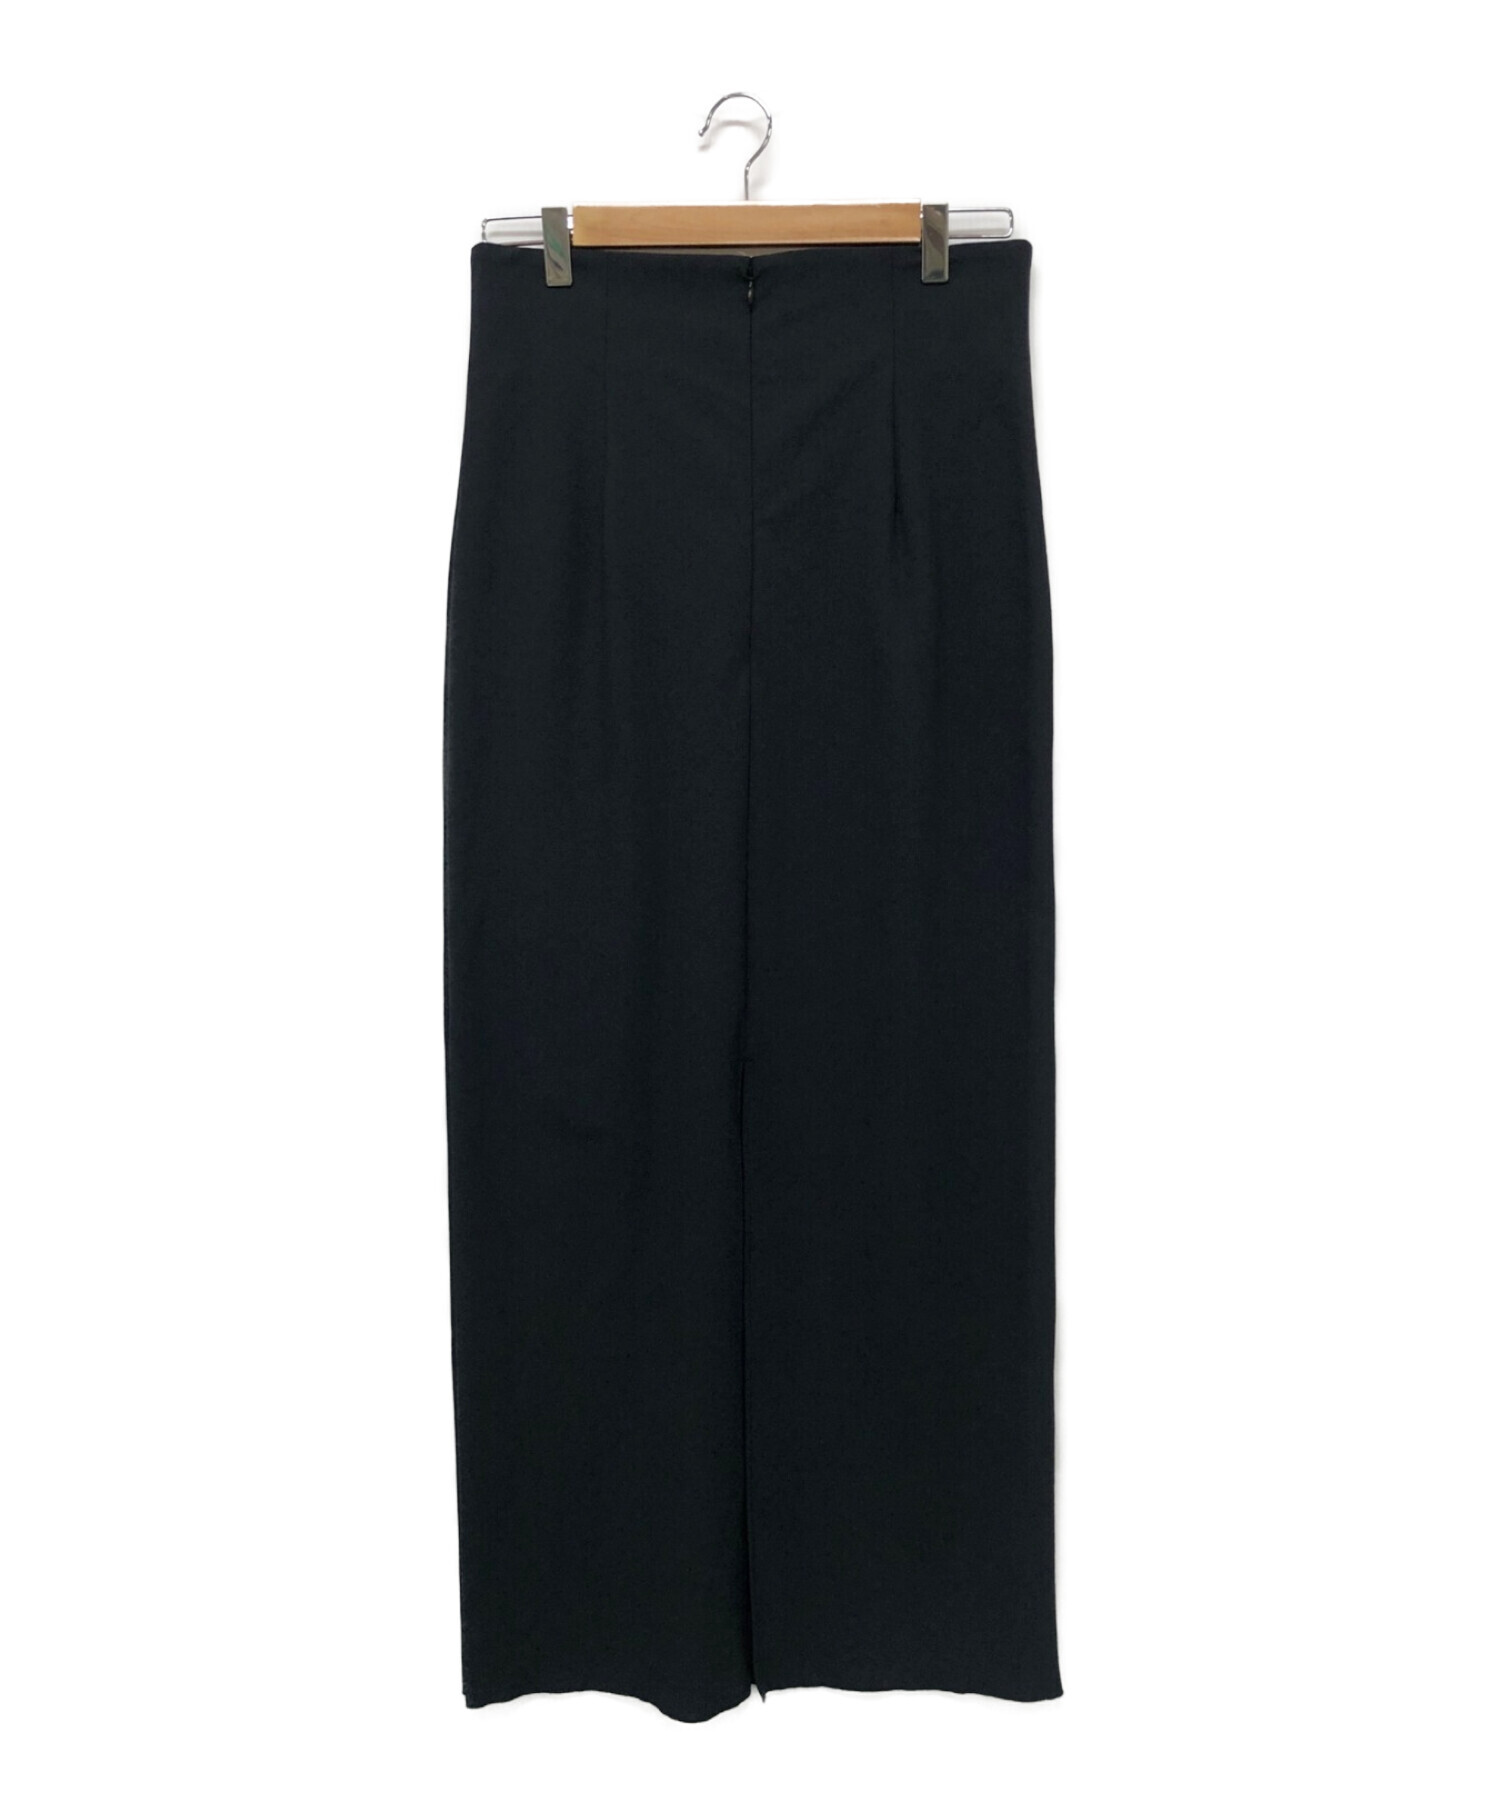 GALLARDA GALANTE (ガリャルダガランテ) ストレッチマキシタイトスカート ブラック サイズ:2